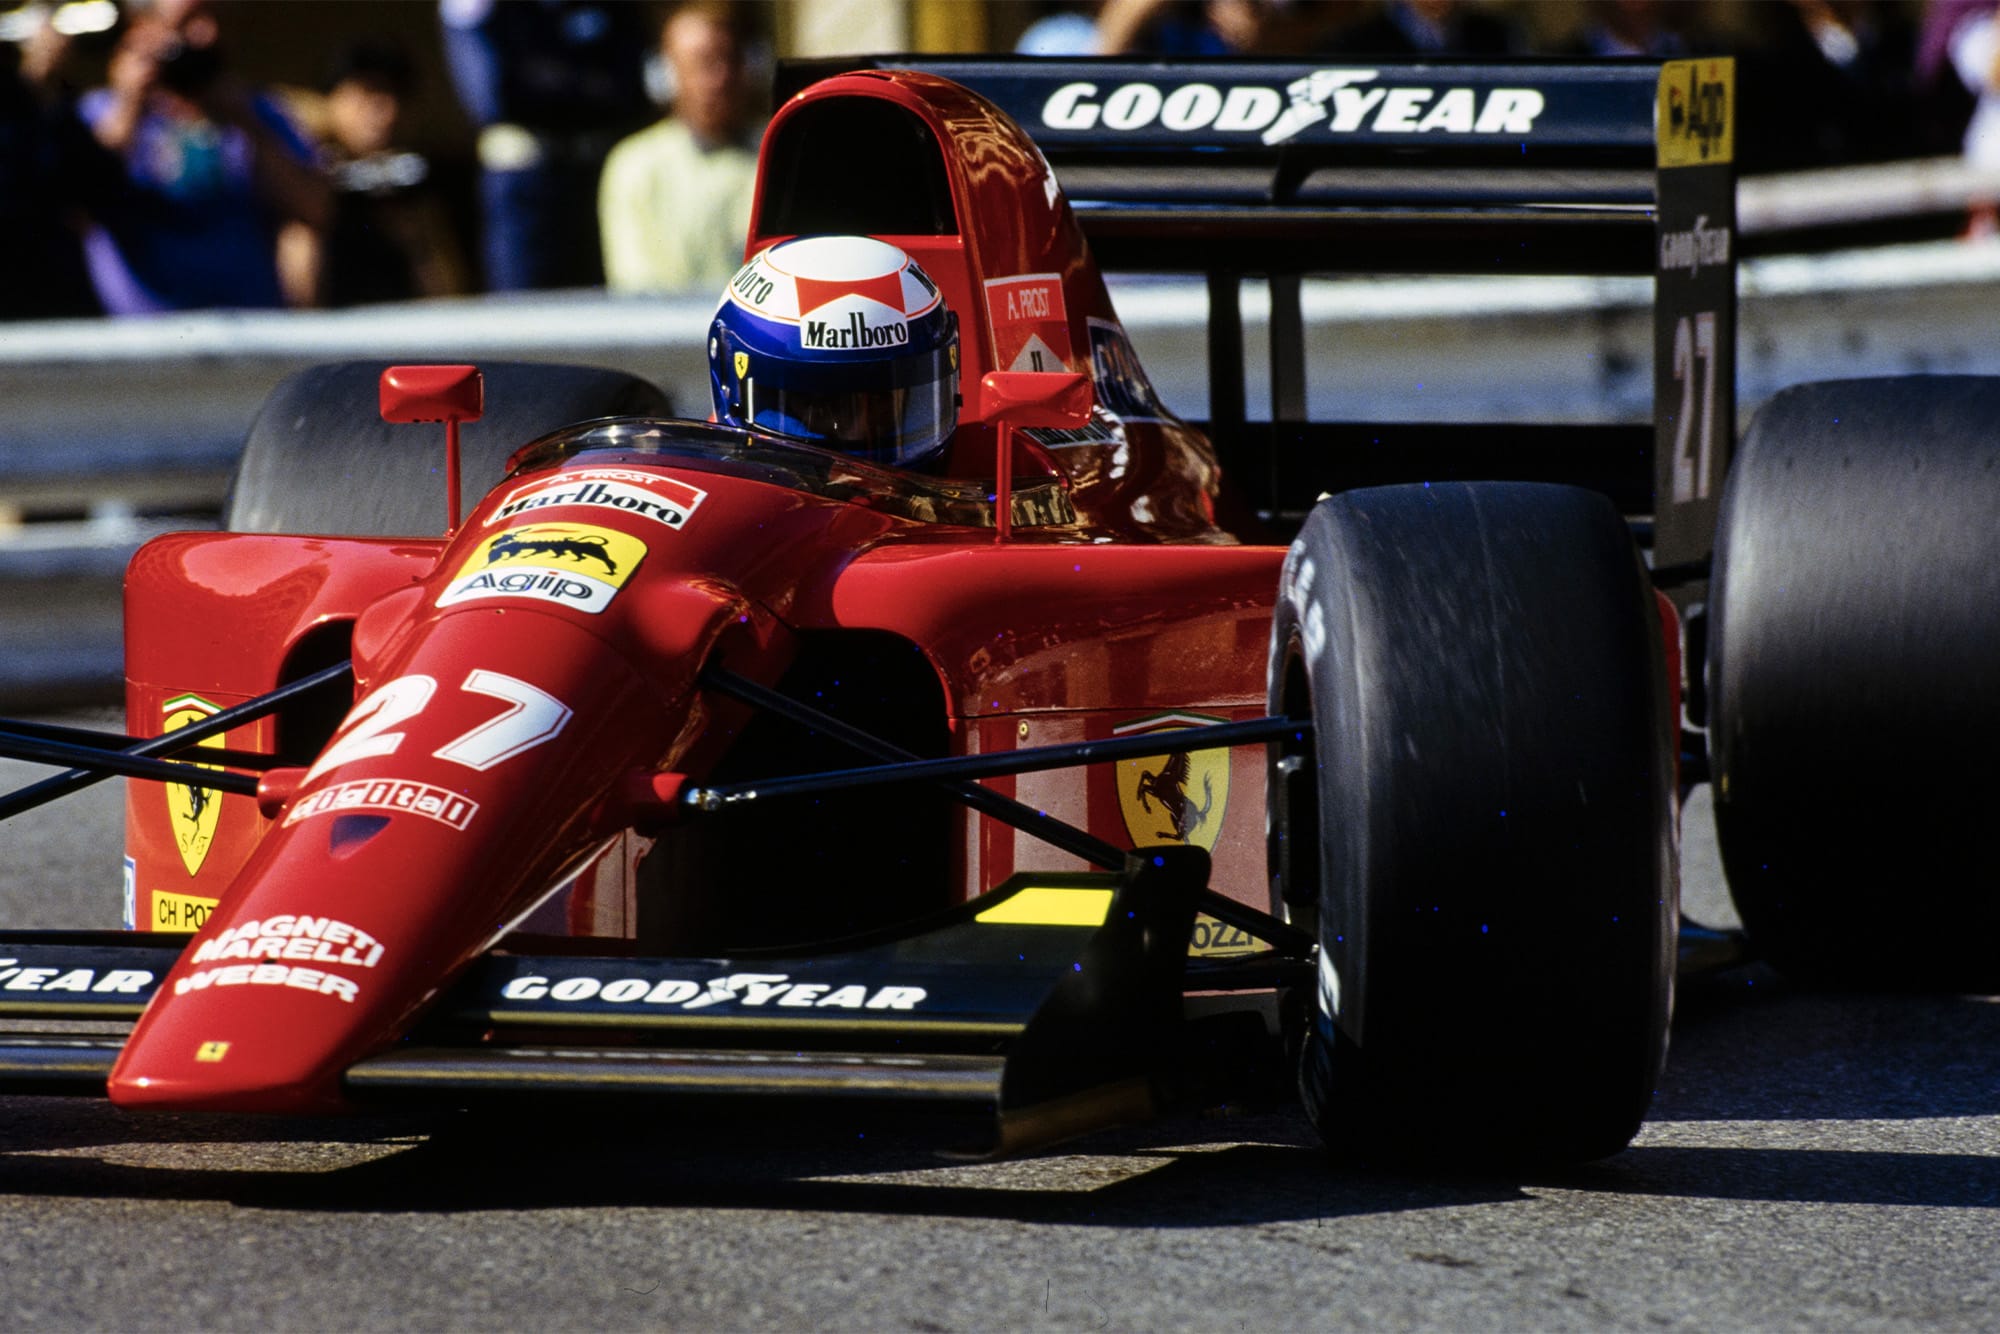 Alain Prost in the Ferrari